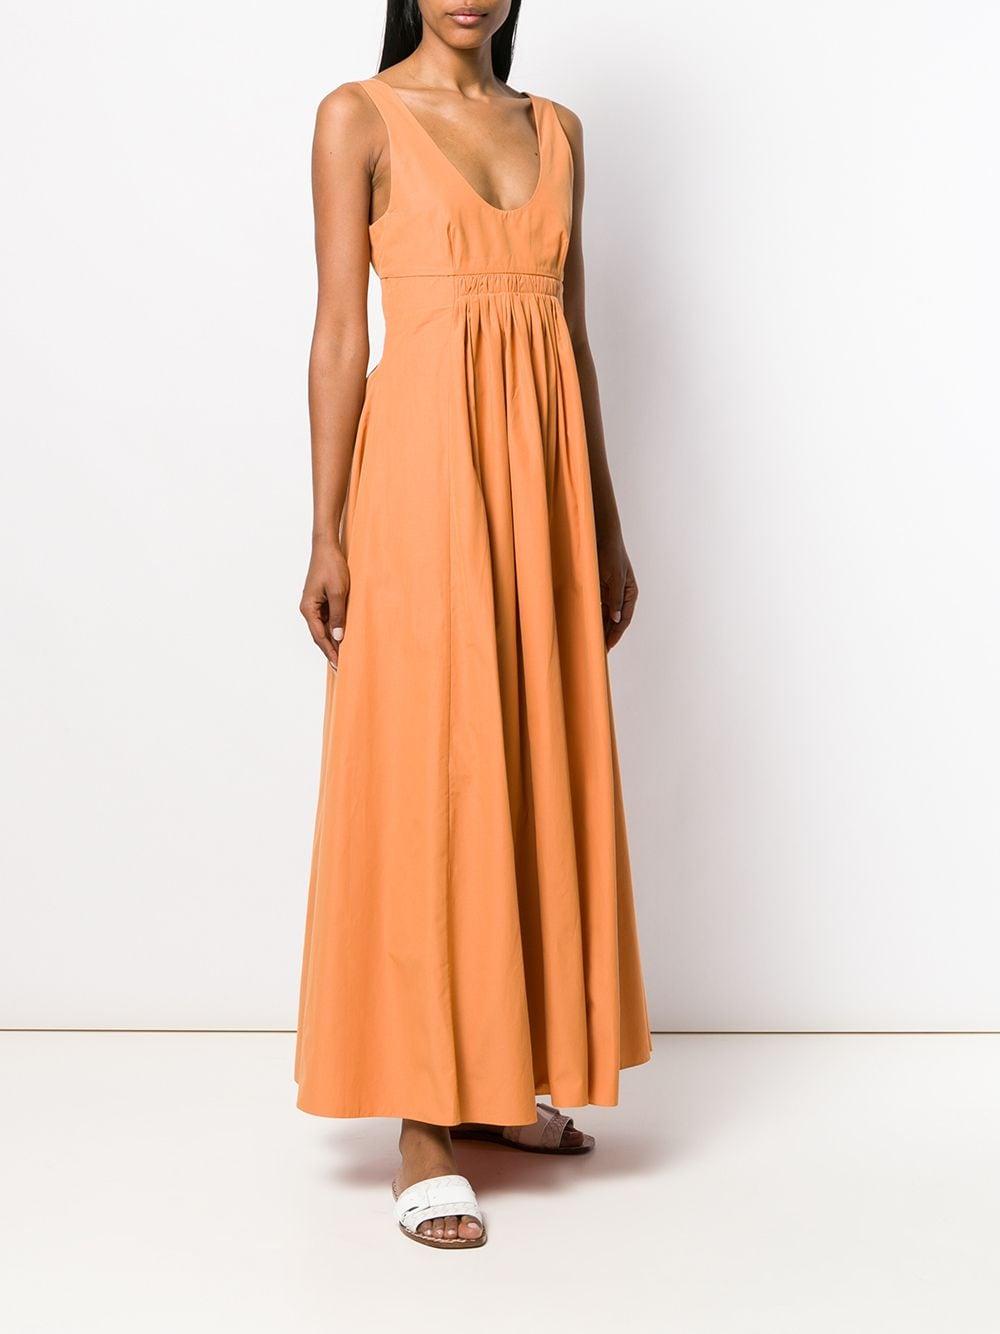 Three Graces London Cotton Vestido Laurette Dress in Orange - Lyst